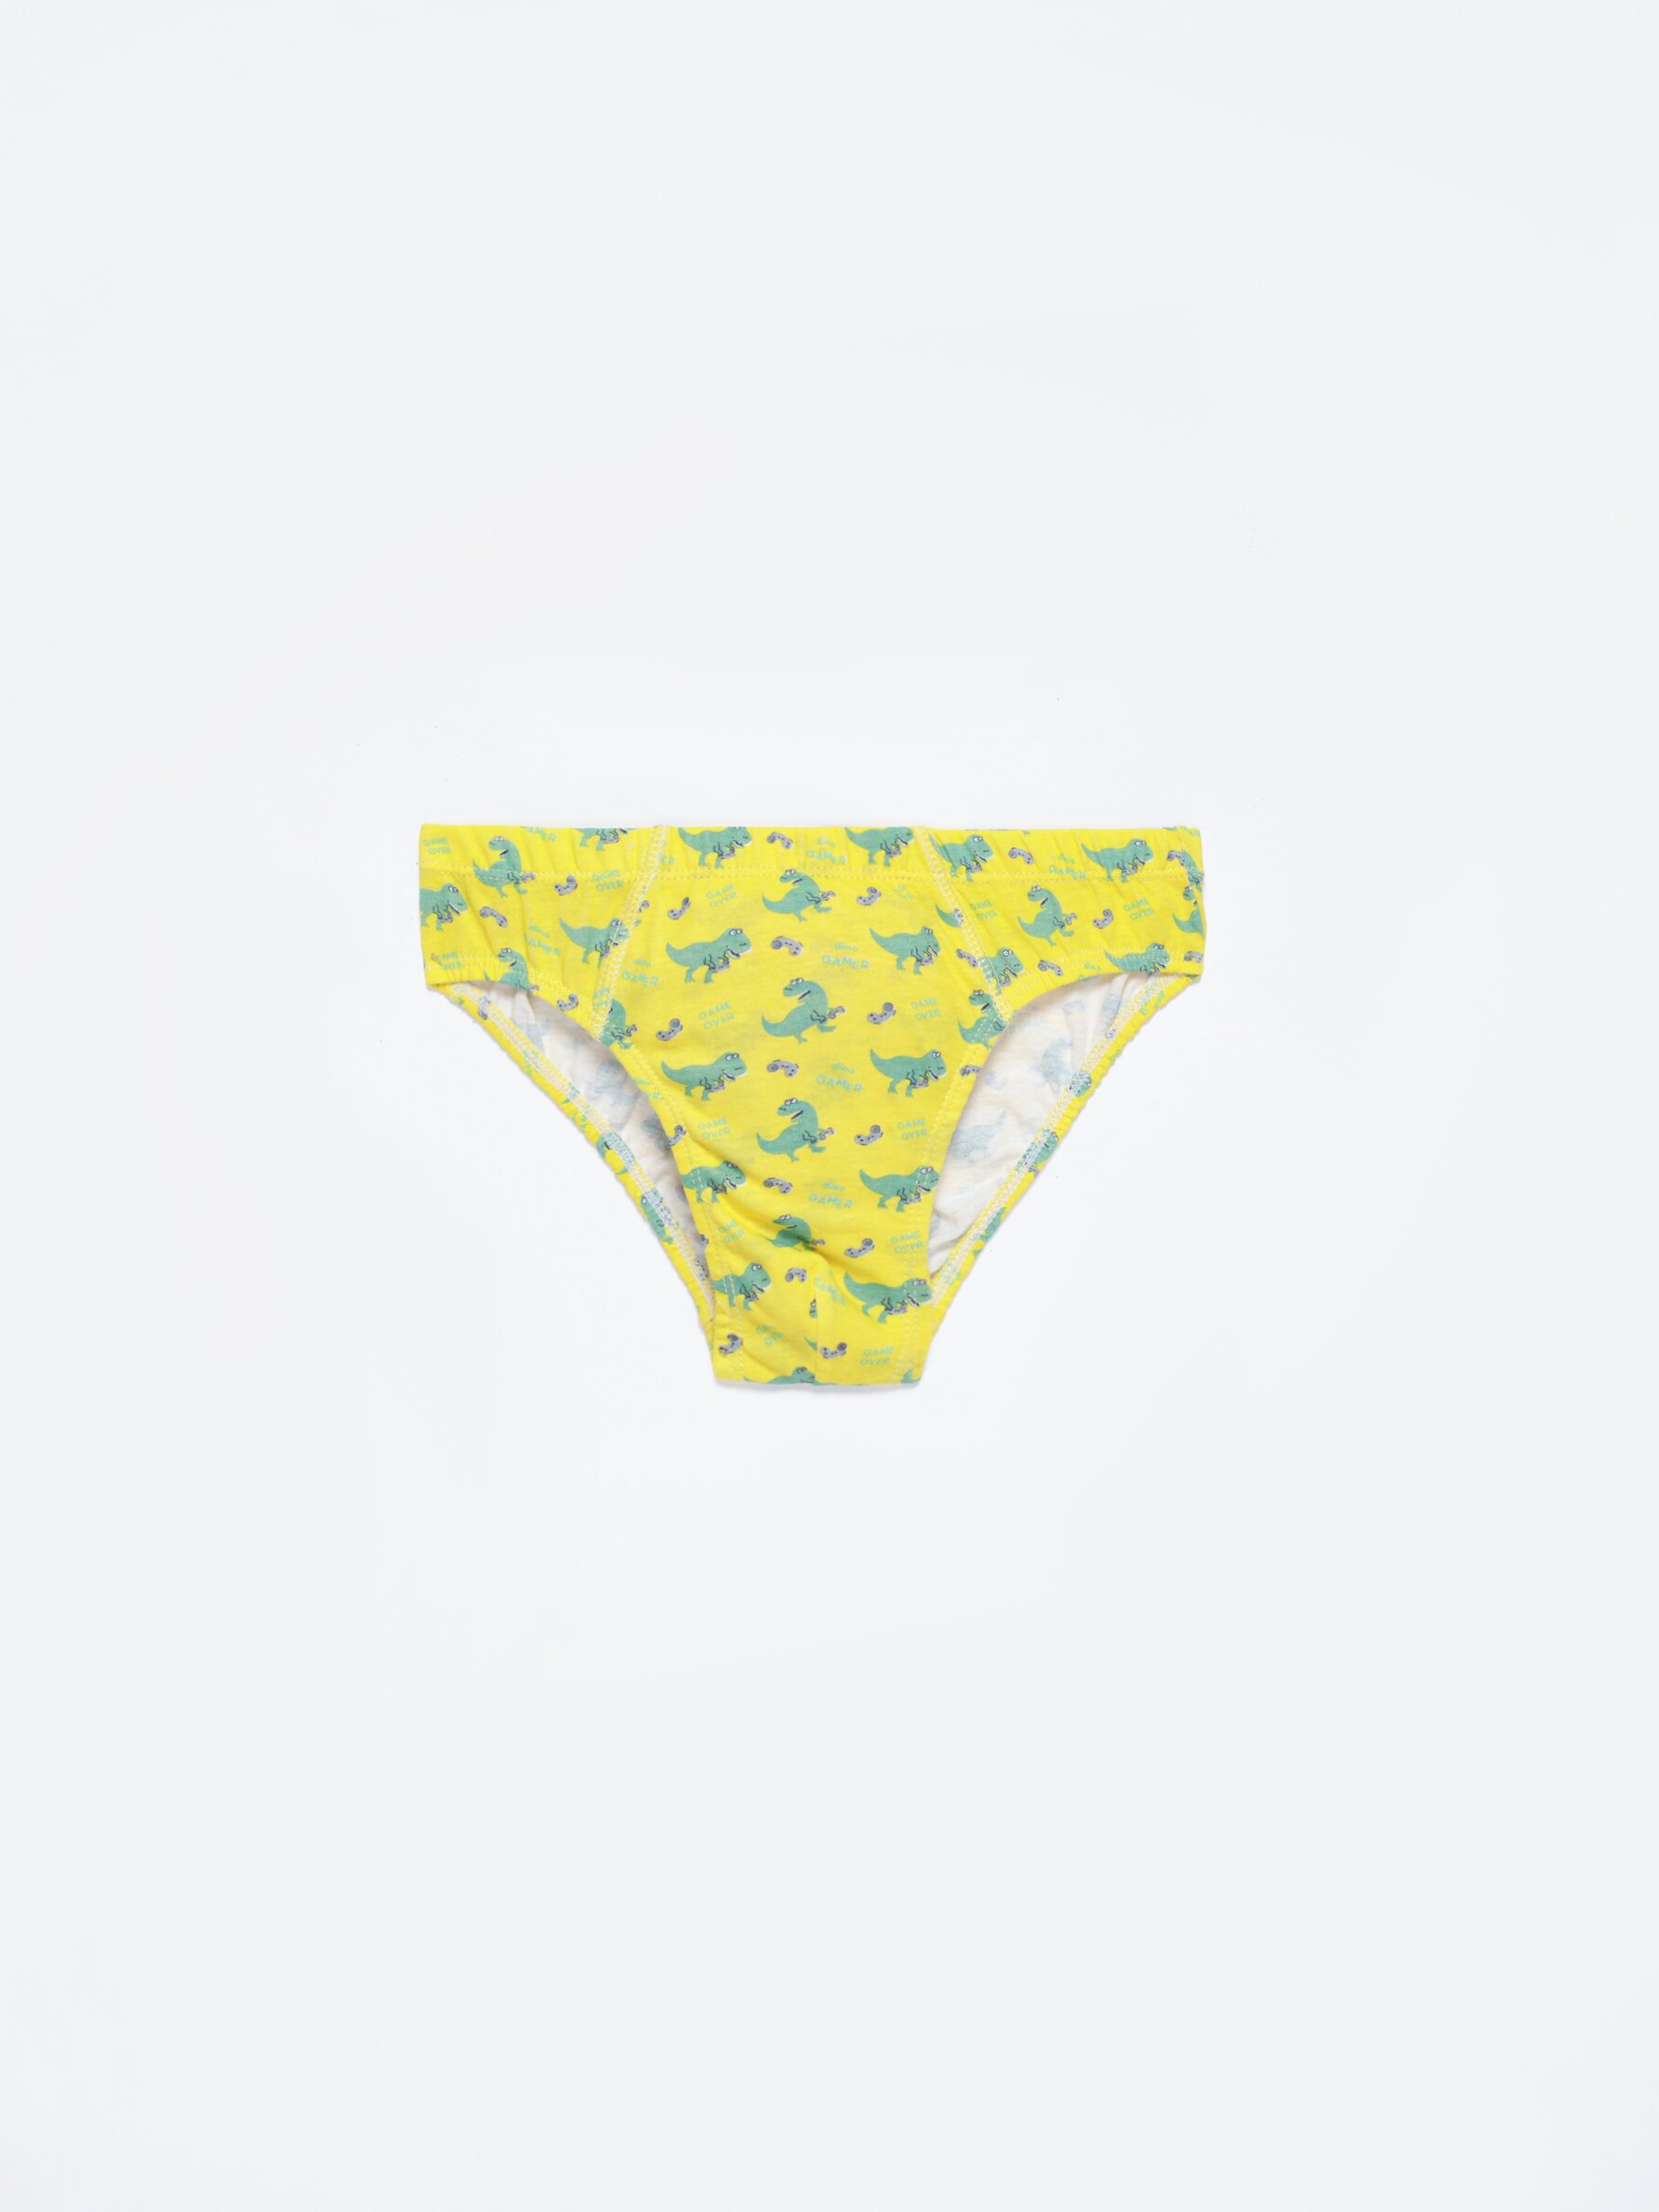 Printed Bikini Underwear 7-Pack for Girls